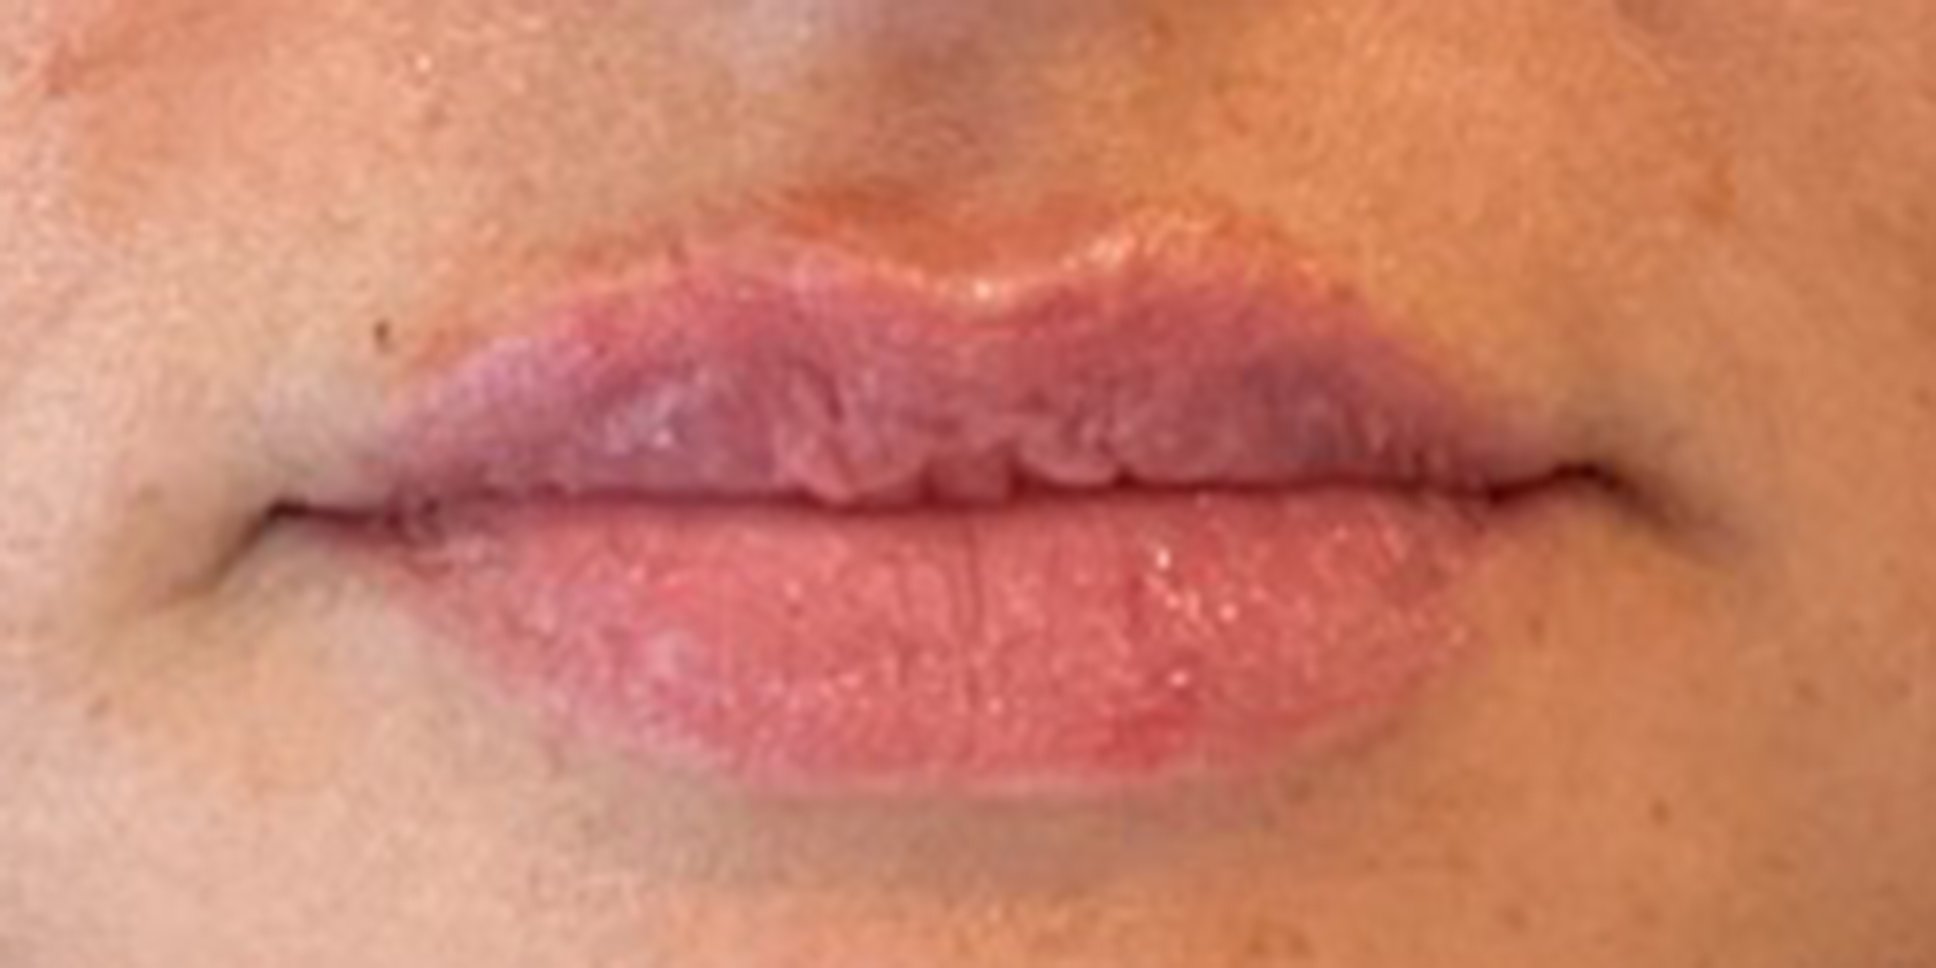 After Lip Filler Treatment